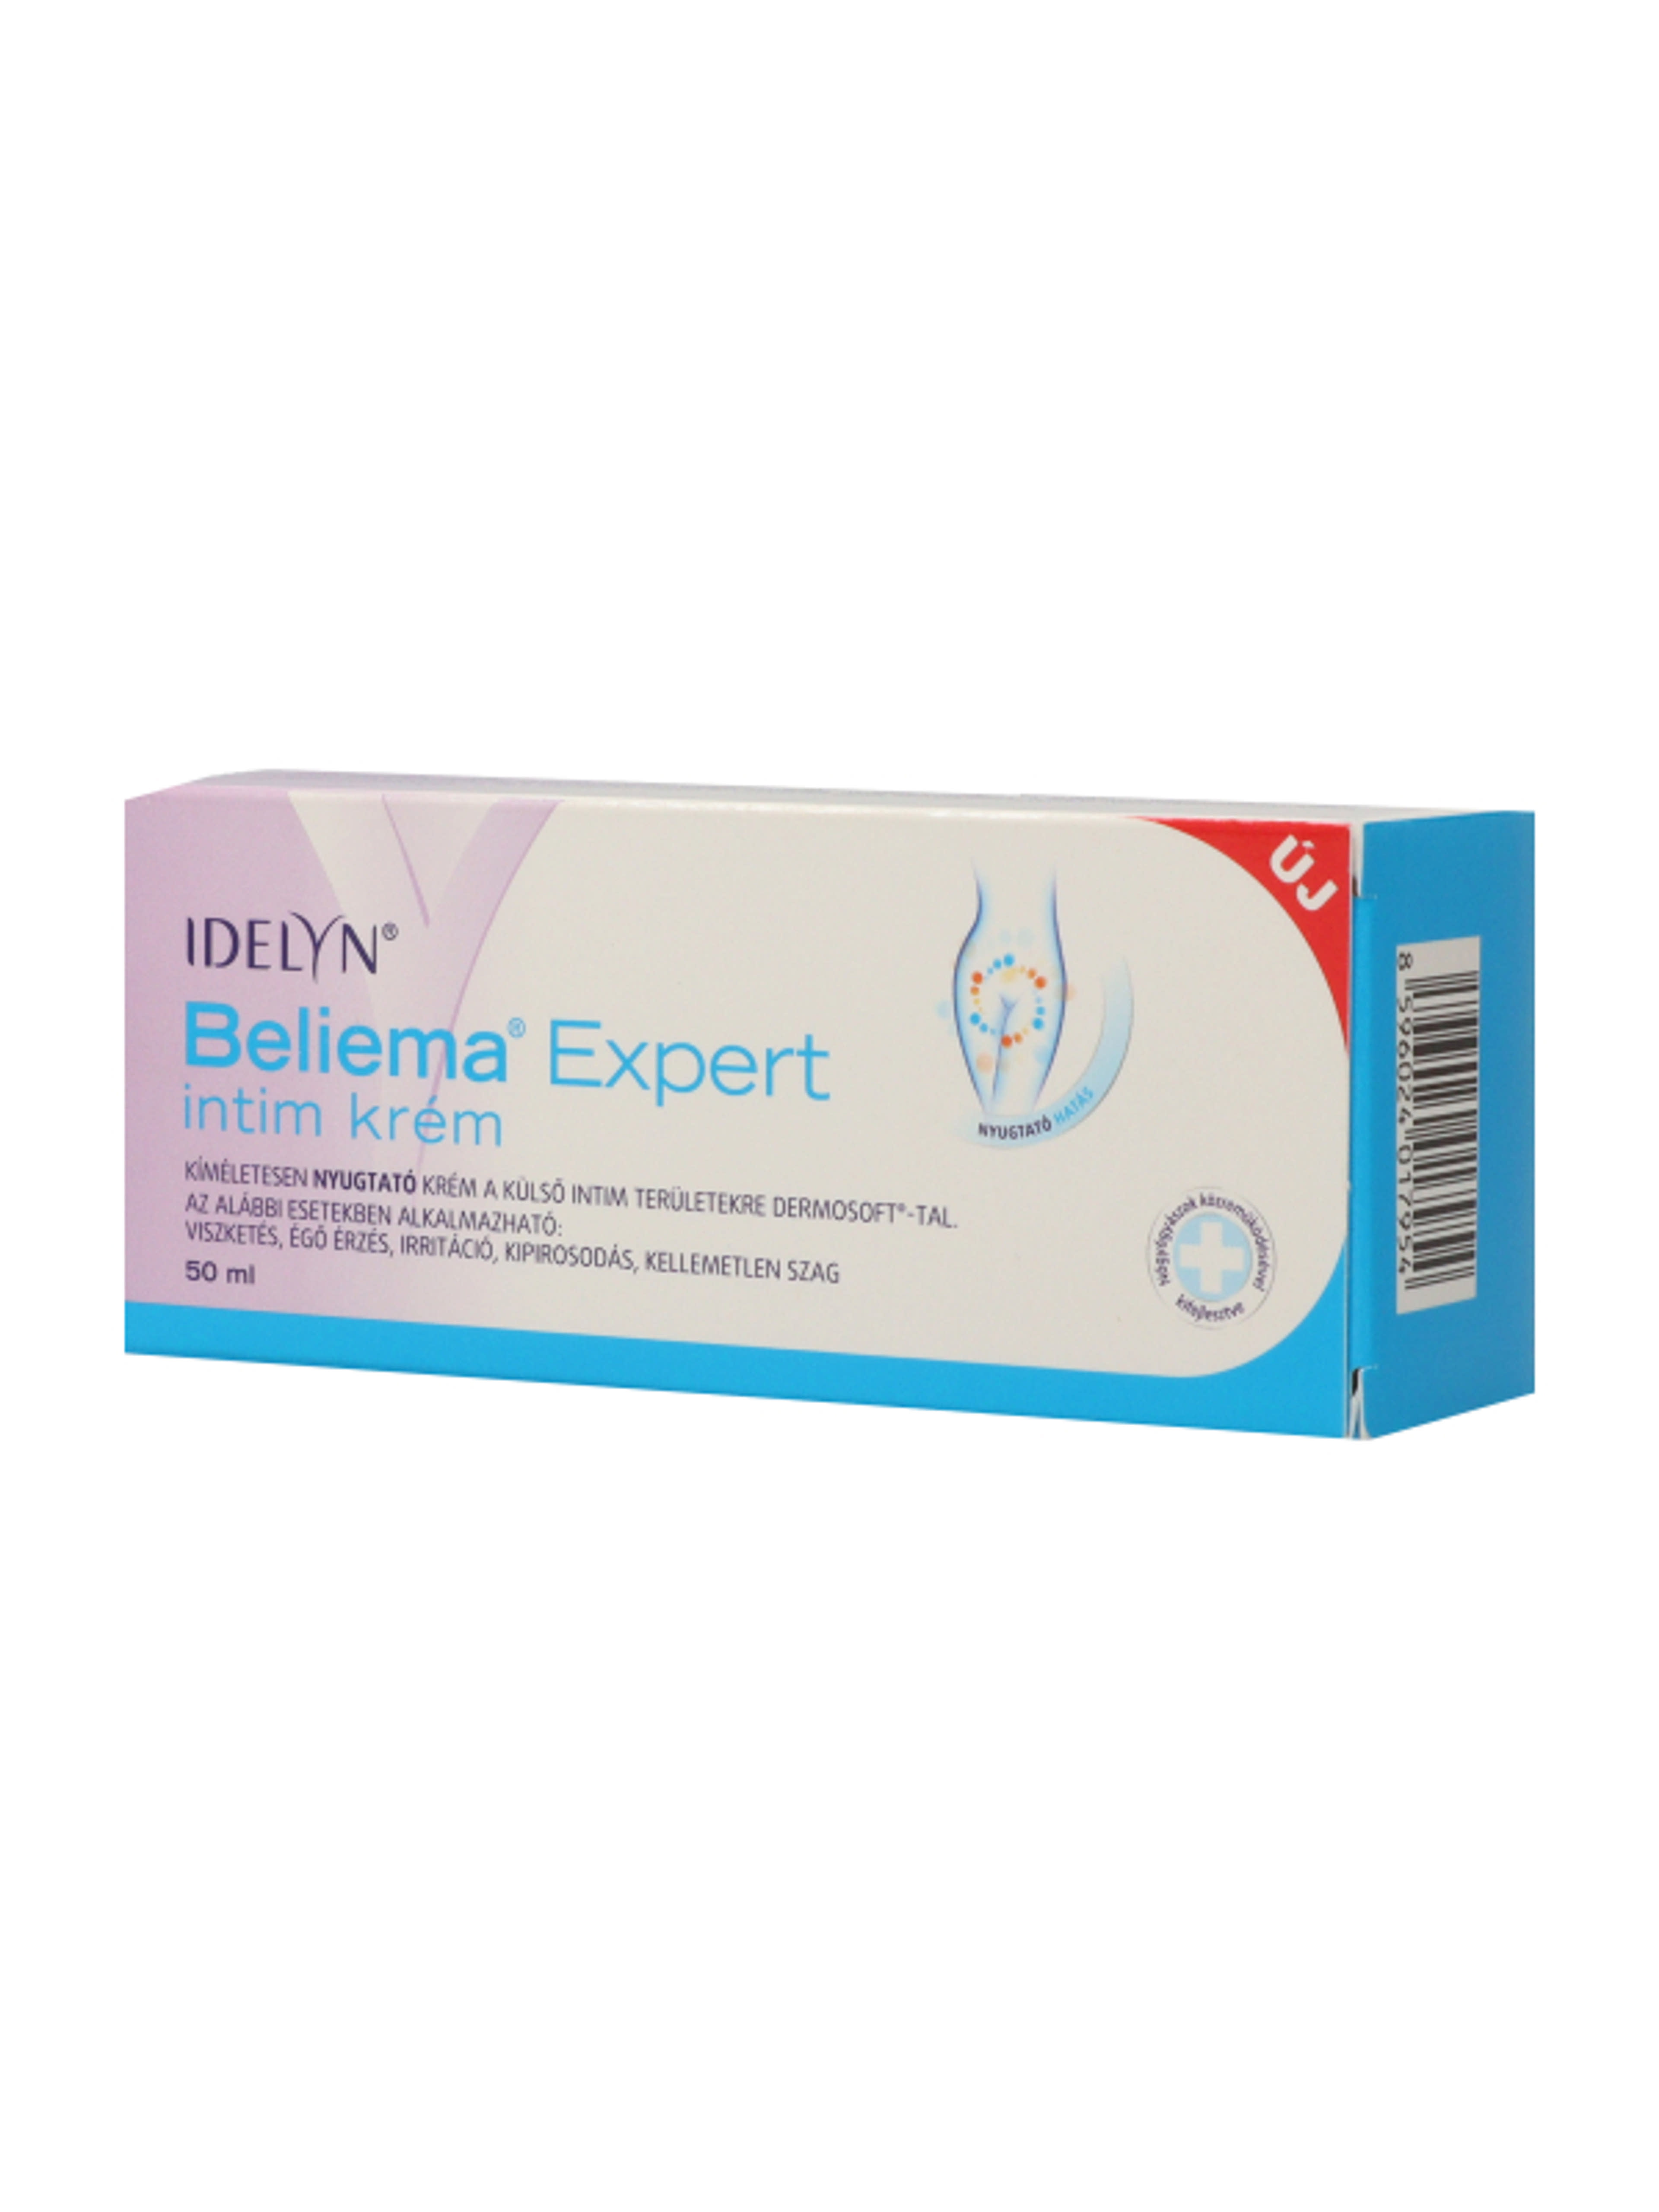 Idelyn Beliema Expert intim krém - 50 ml-3